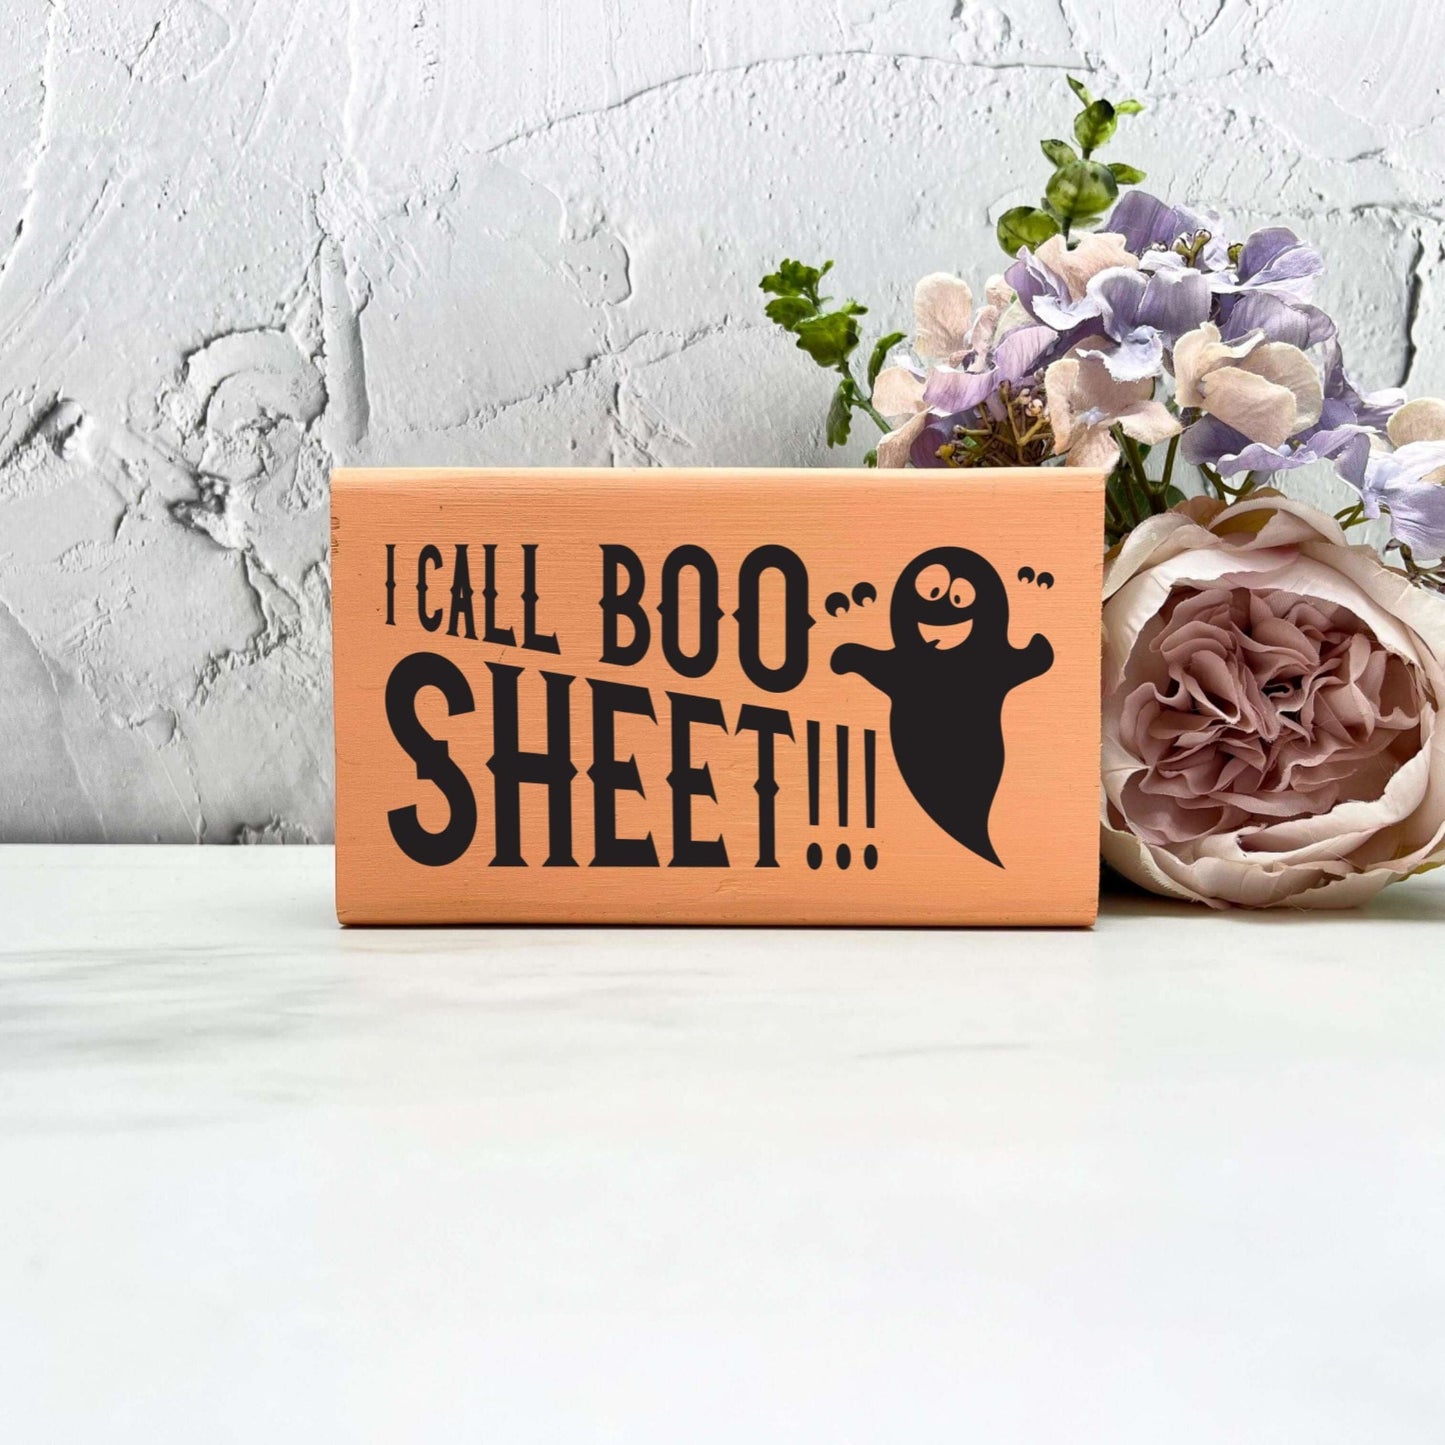 I call boo sheet Sign, Halloween Wood Sign, Halloween Home Decor, Spooky Decor